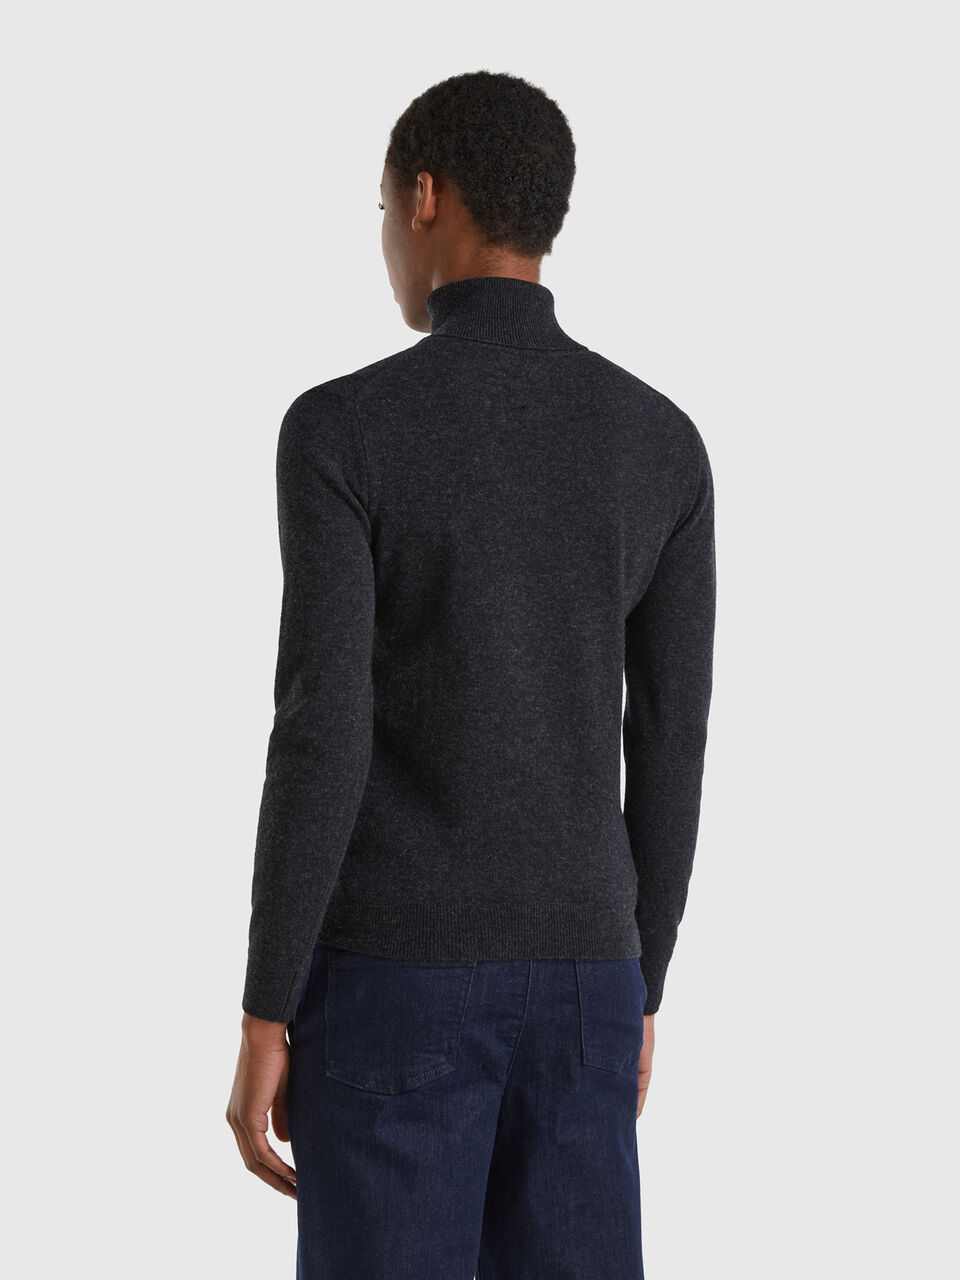 Charcoal gray turtleneck sweater in pure Merino wool